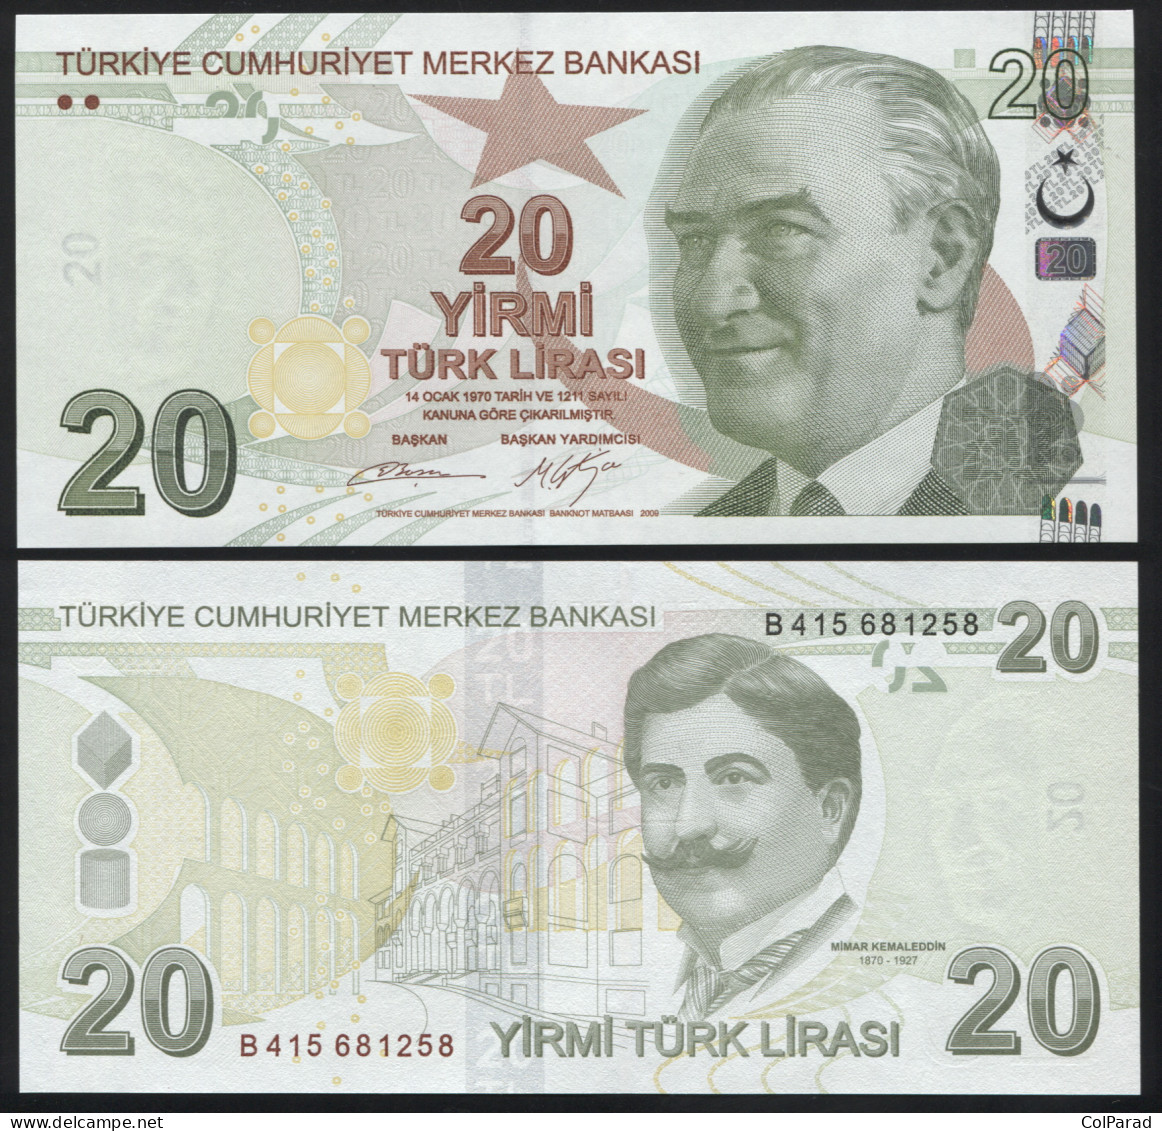 TURKEY 20 TÜRK LIRASI - 2009 (2012) - Paper Unc - P.224b Banknote - Turquie